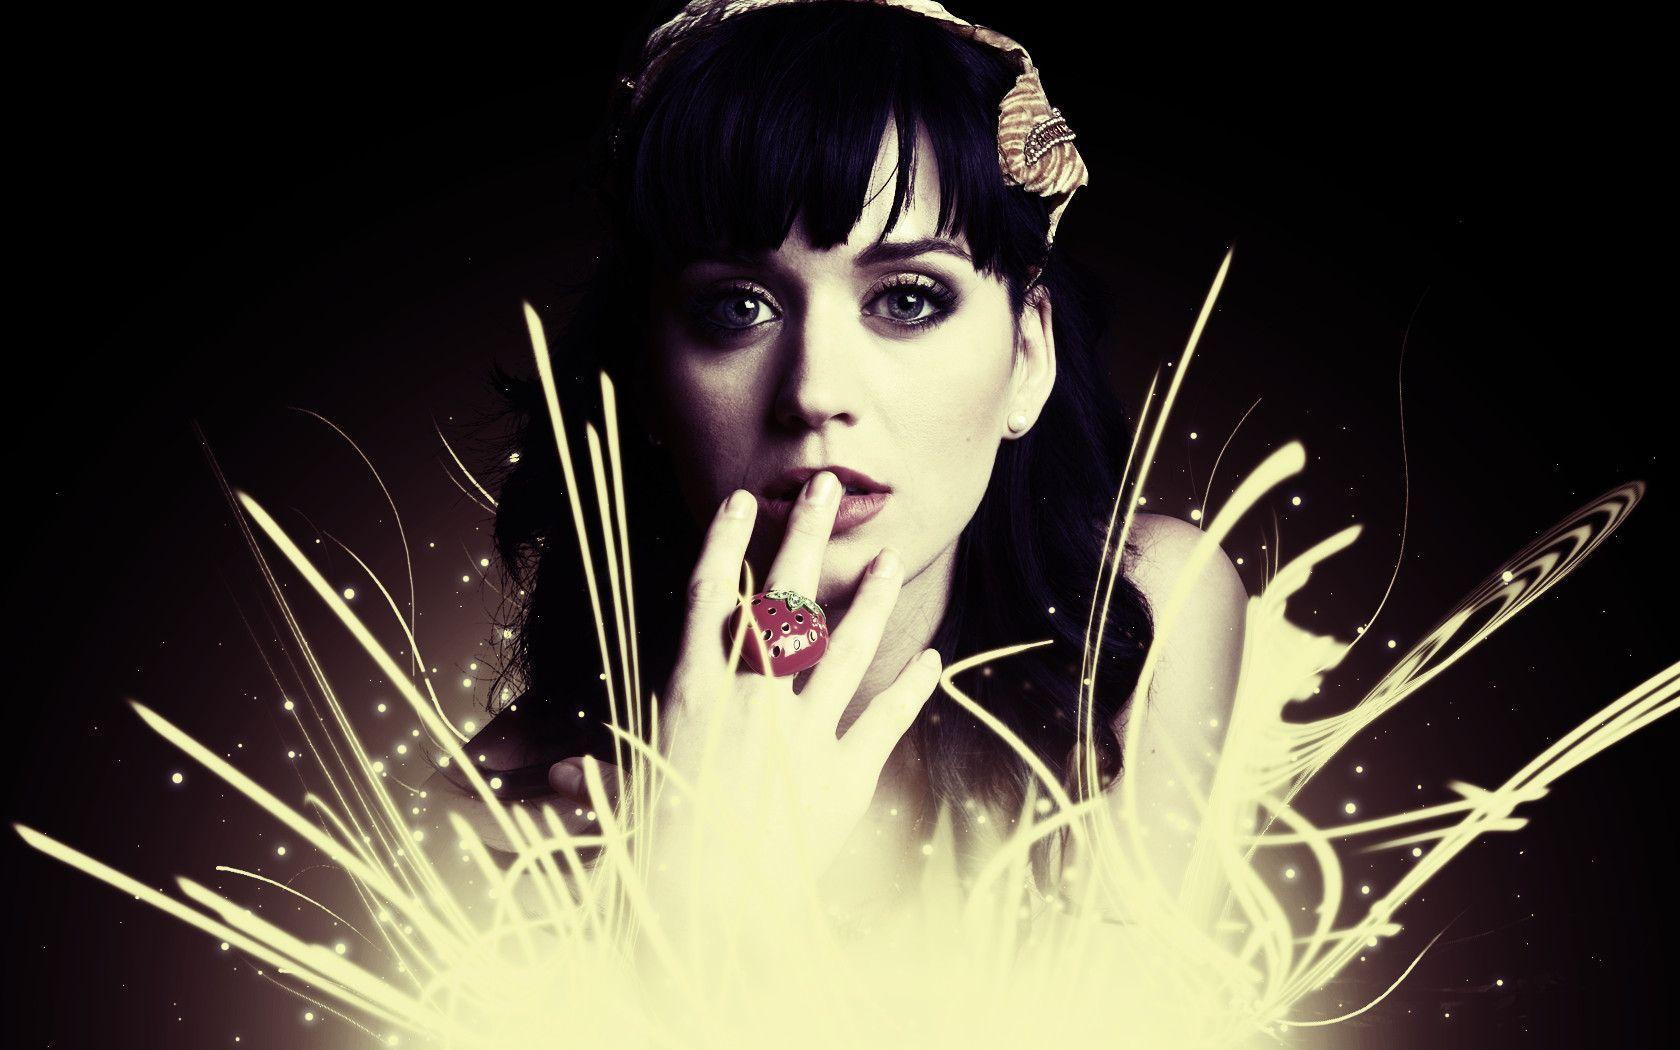 Katy Perry Wallpaper HD